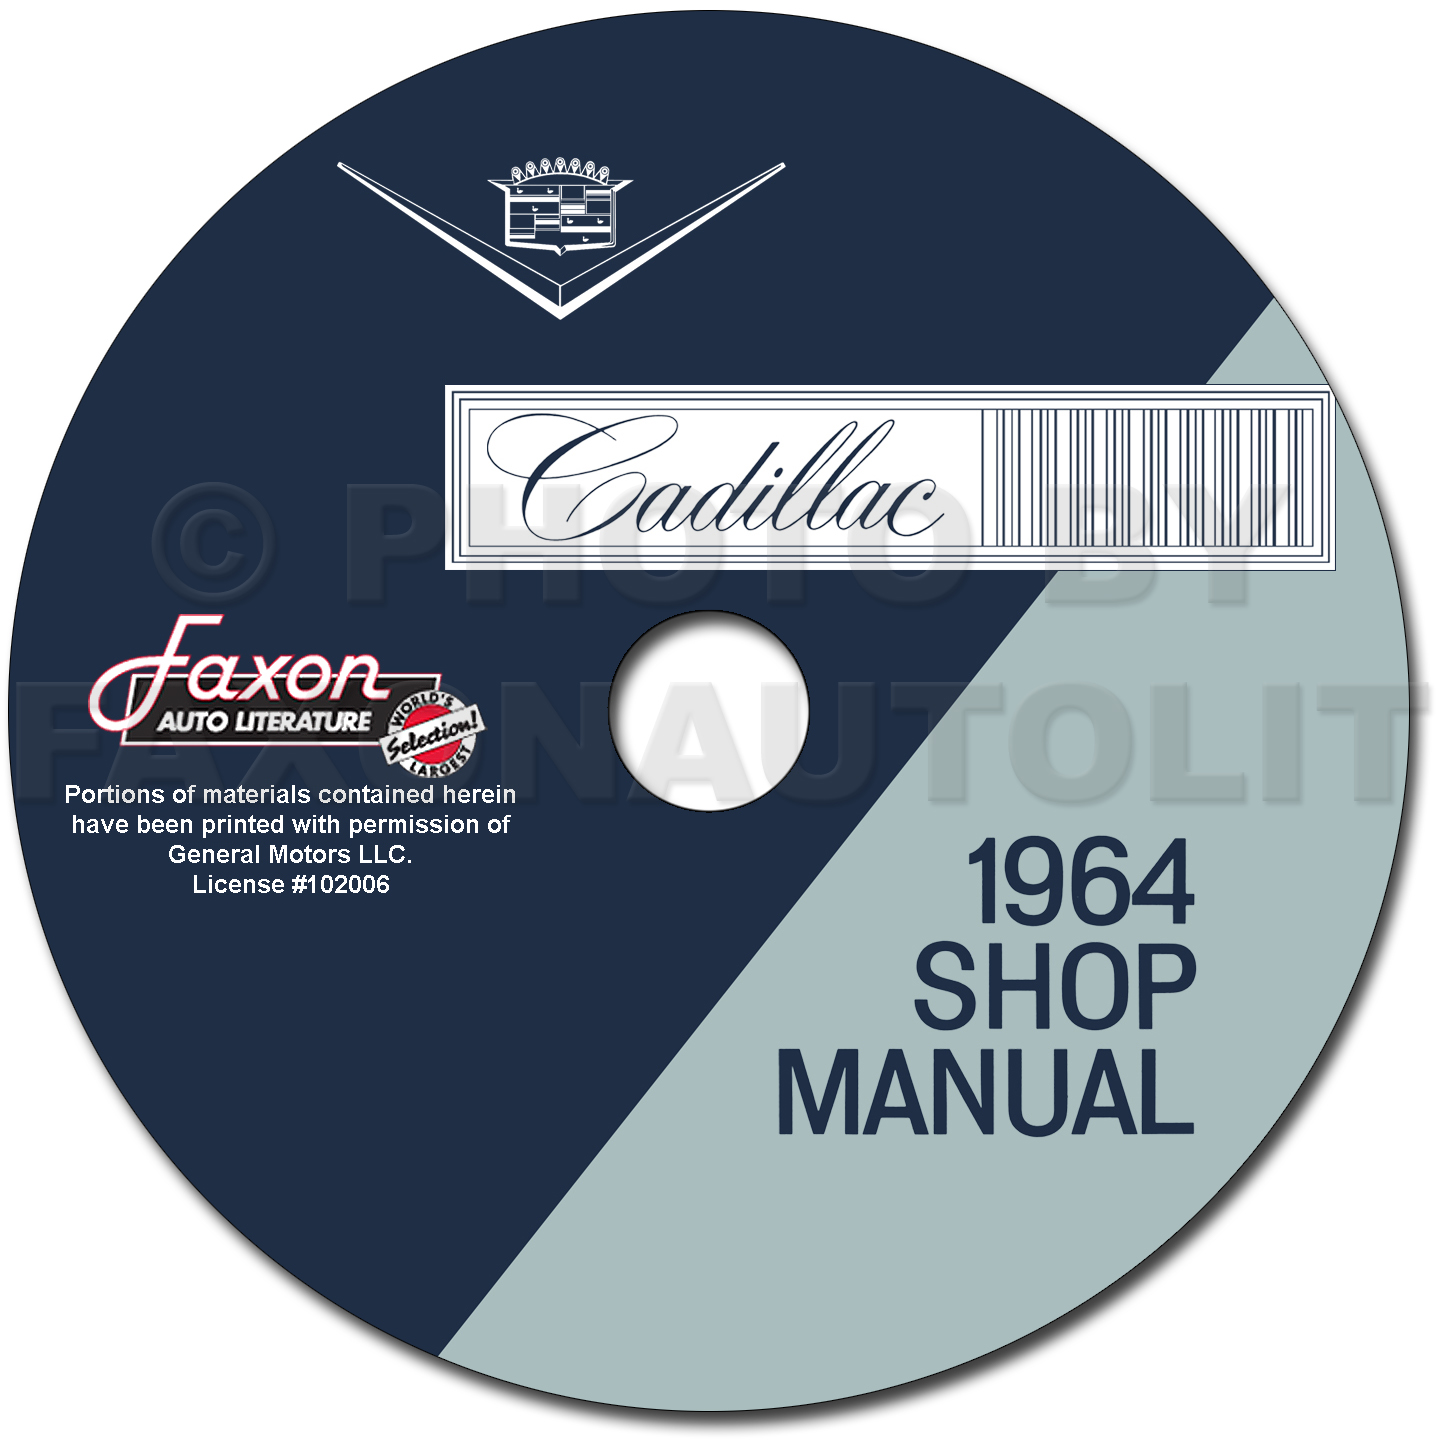 1964 Cadillac Repair Shop Manual on CD-ROM